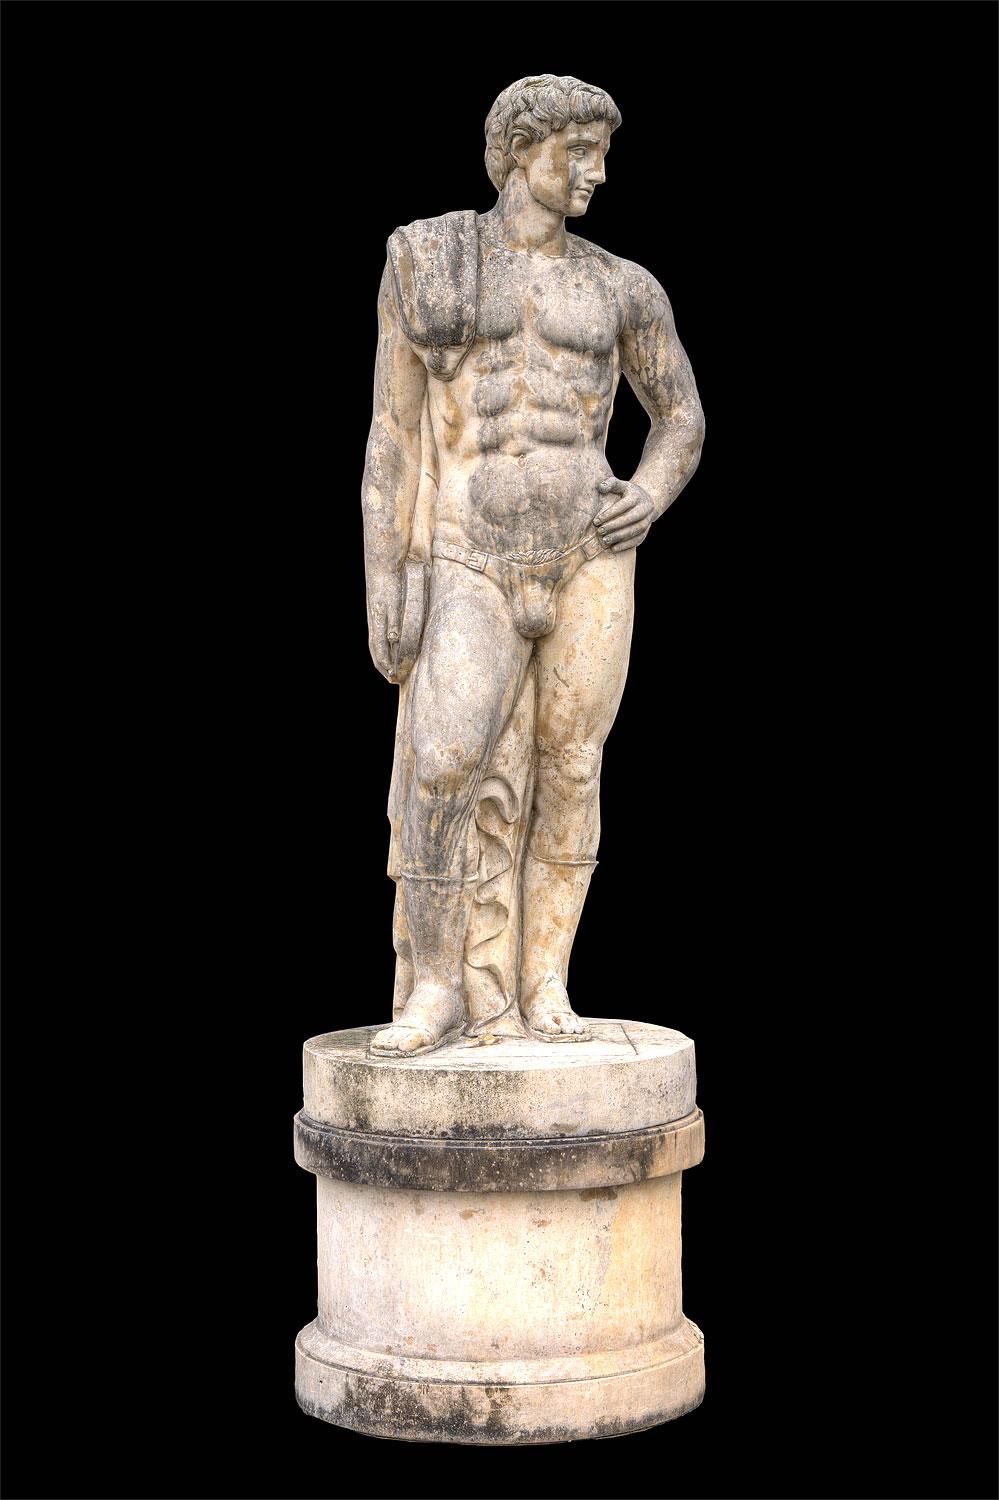  Figuratif figuratif italien en marbre monumental de style rationaliste  Sculptures de nus en vente 5